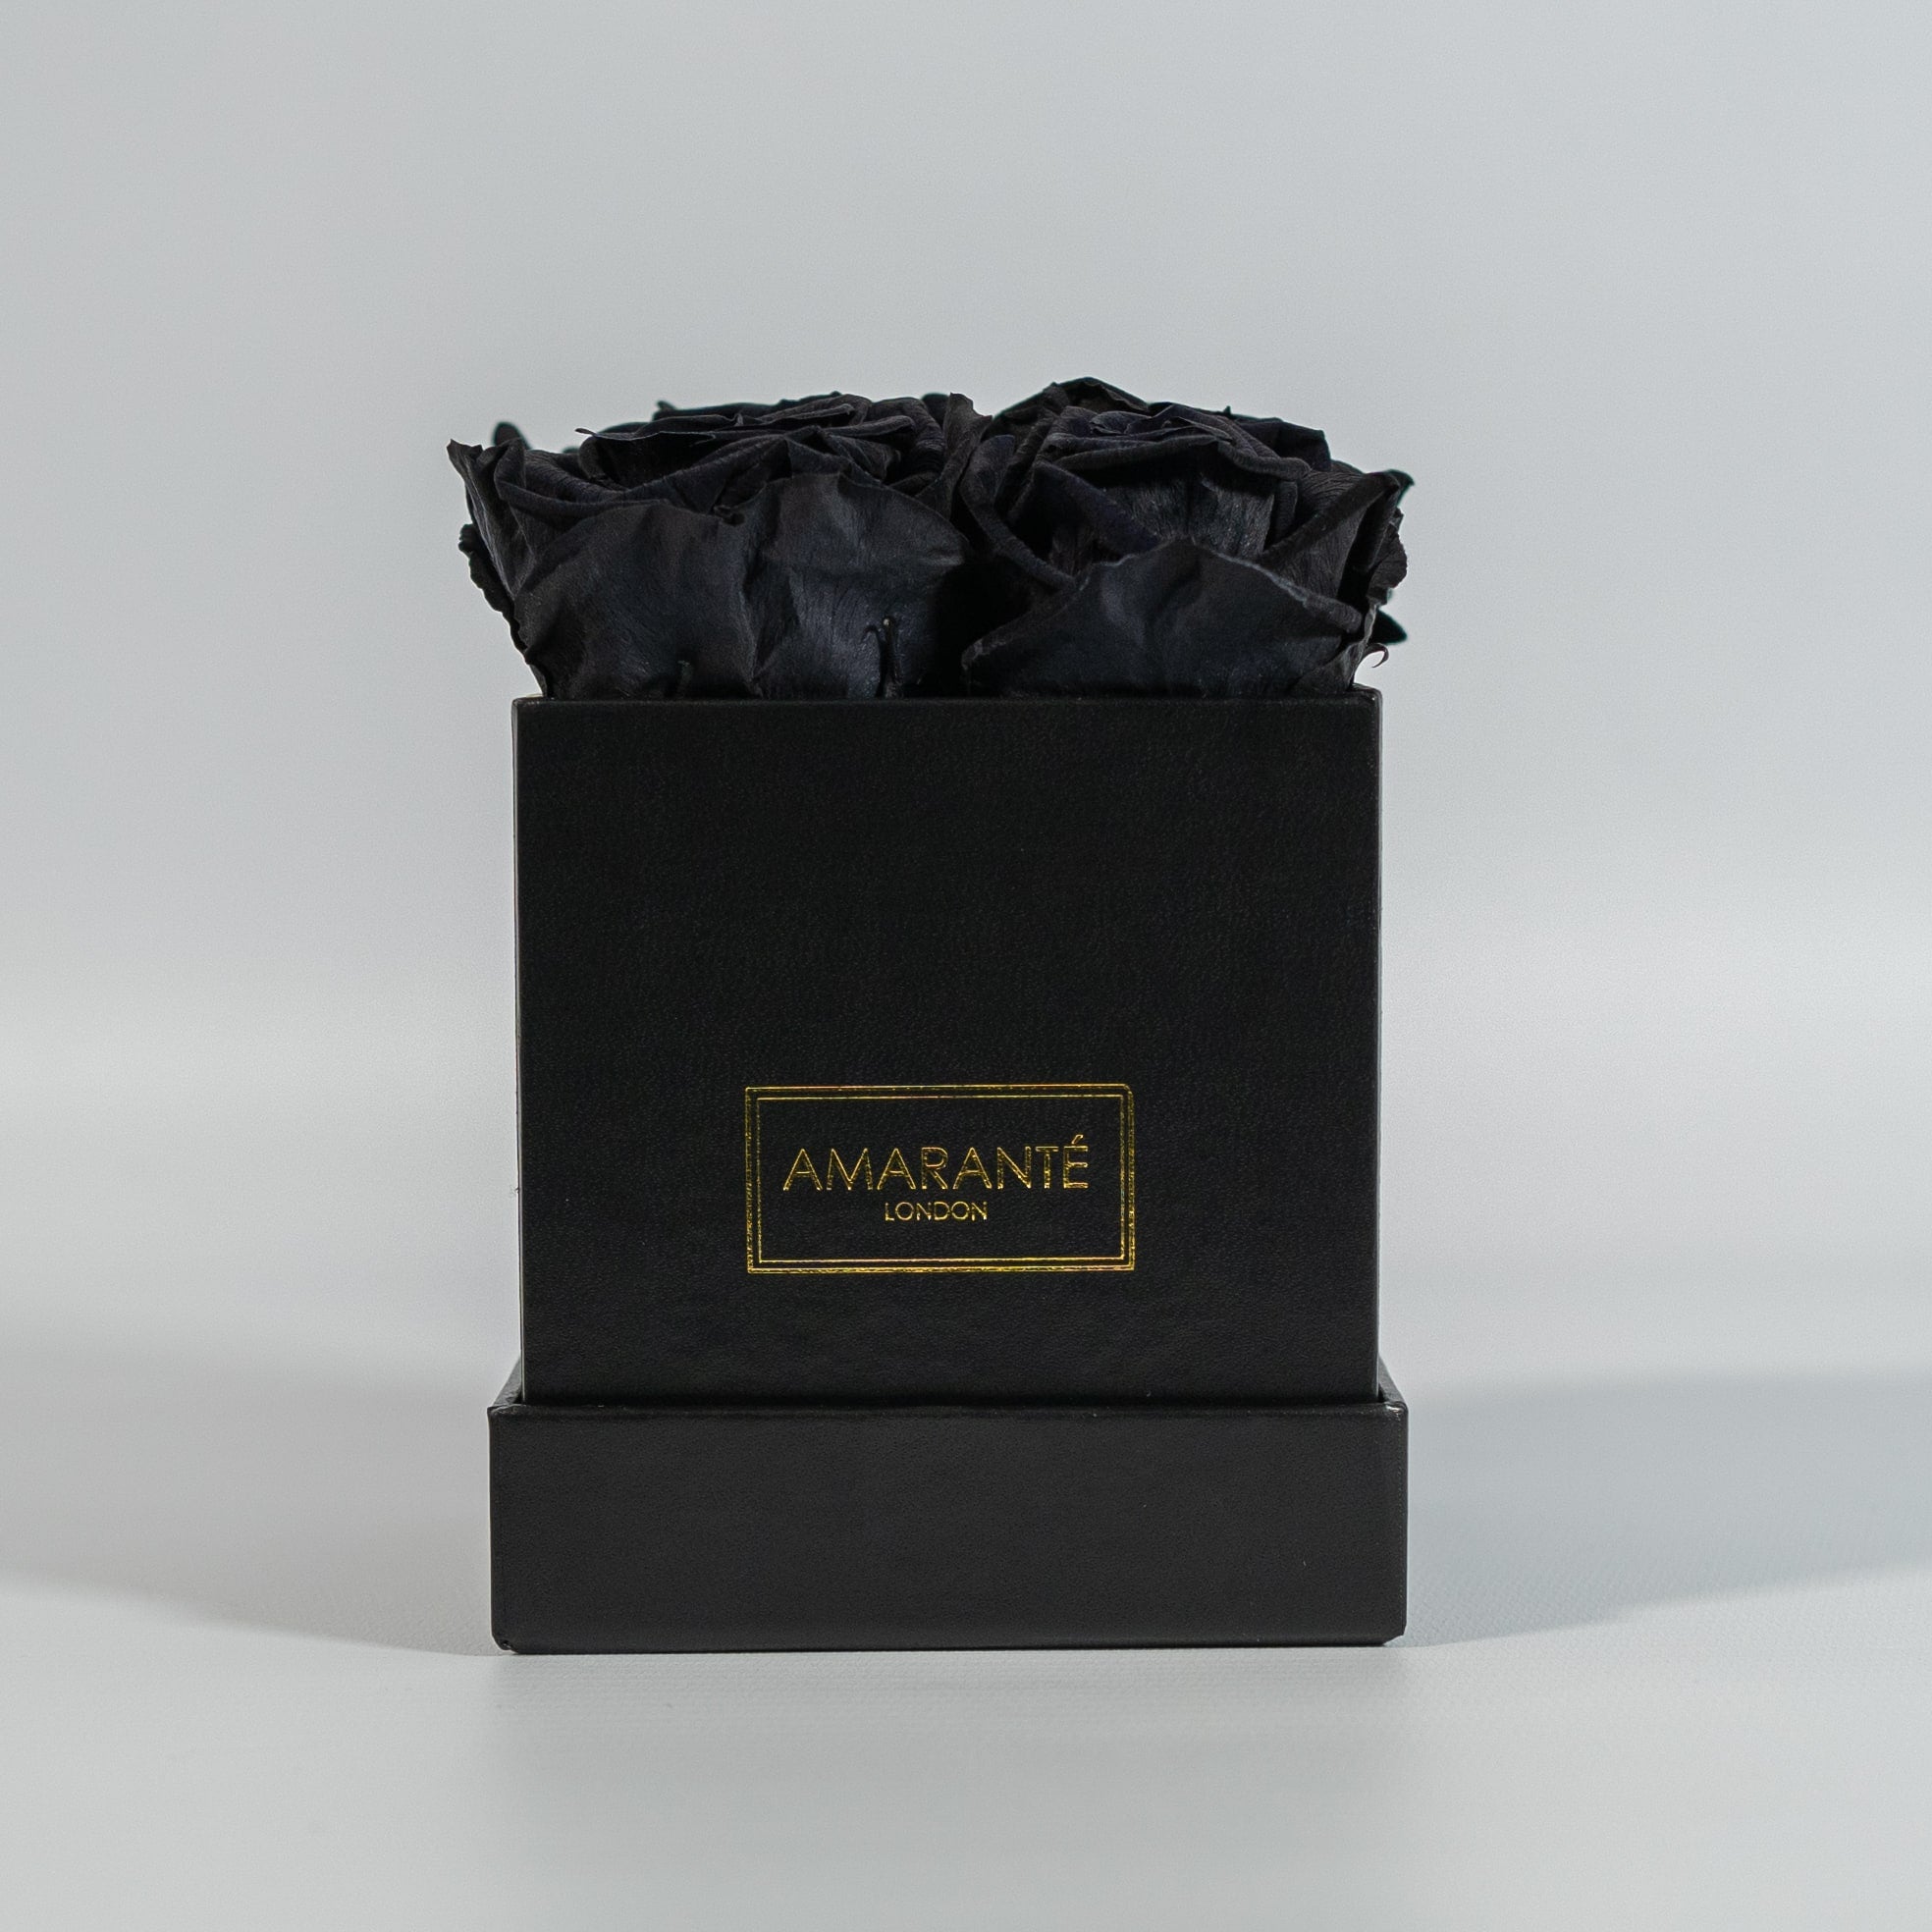 Botanical black roses encompassed in a monochromatic black box 